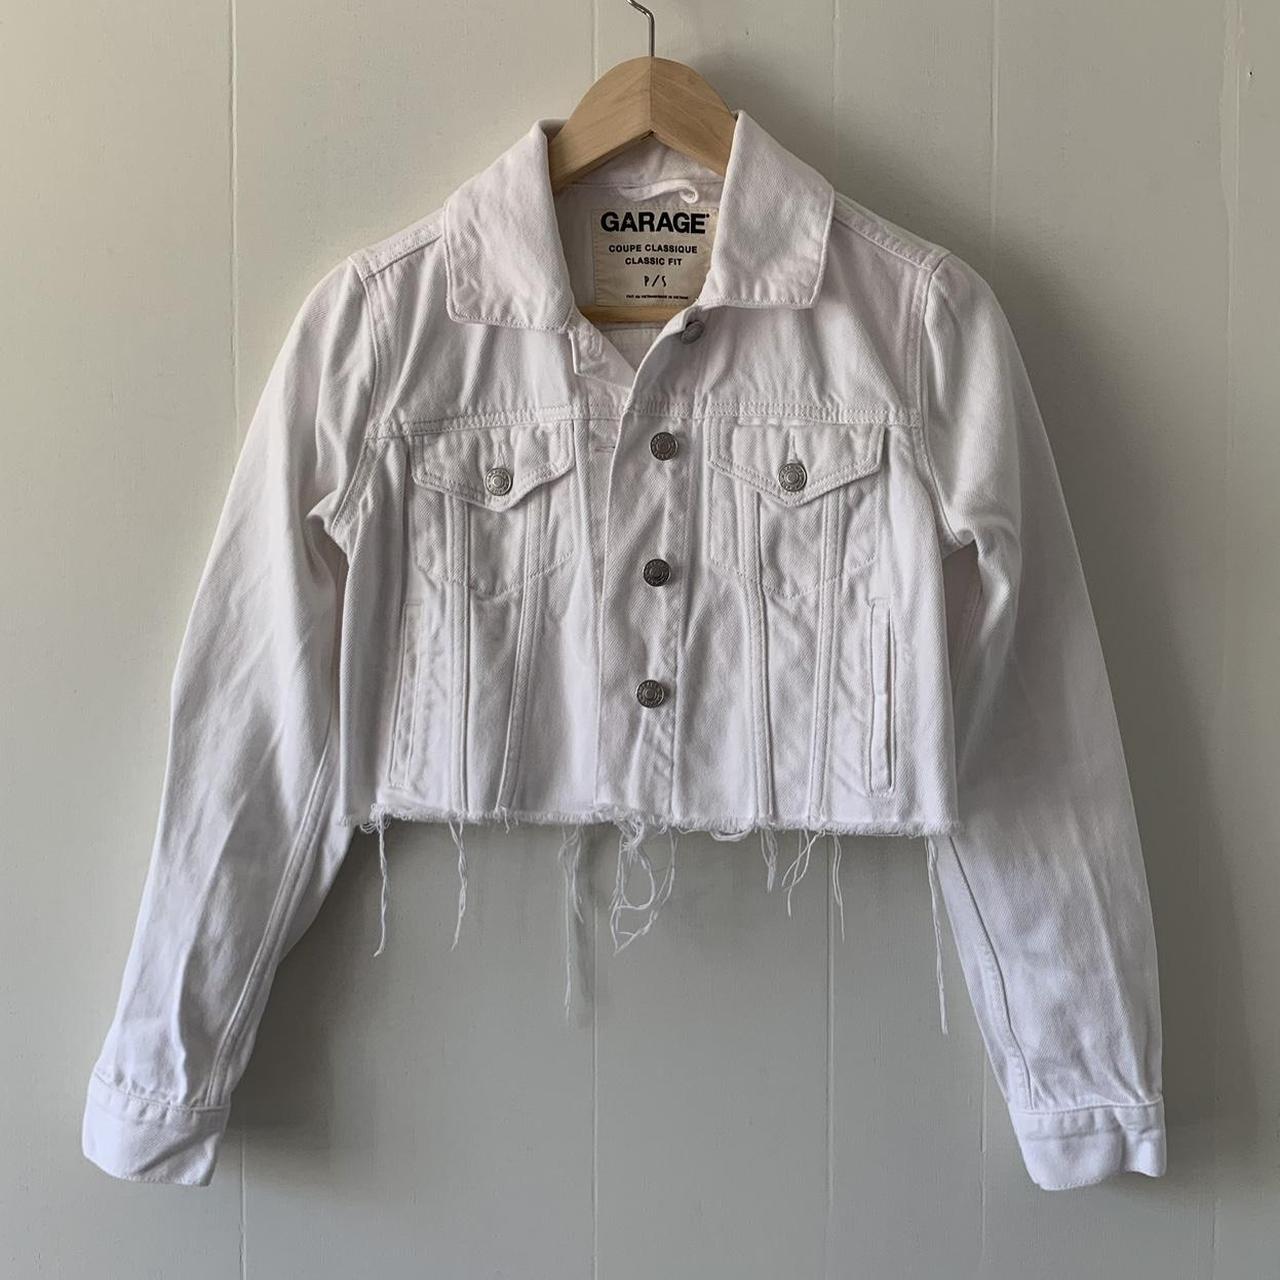 Garage Women's White and Silver Jacket | Depop